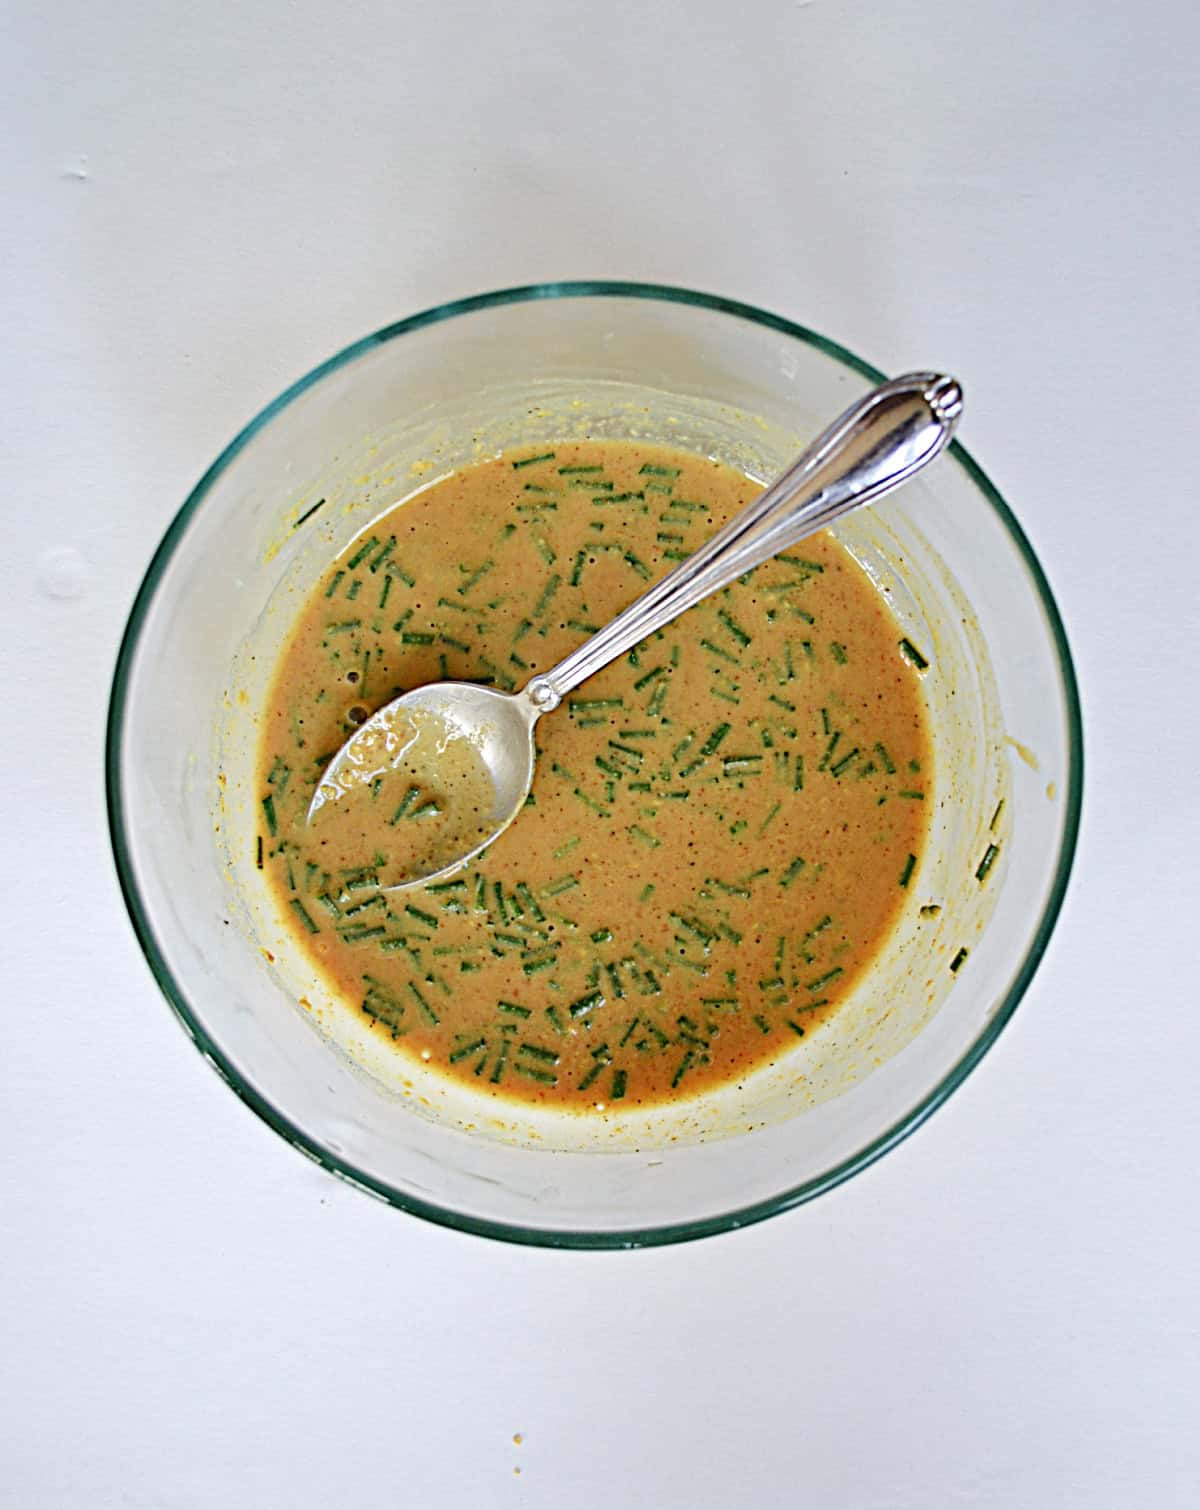 A bowl of warm mustard vinaigrette.